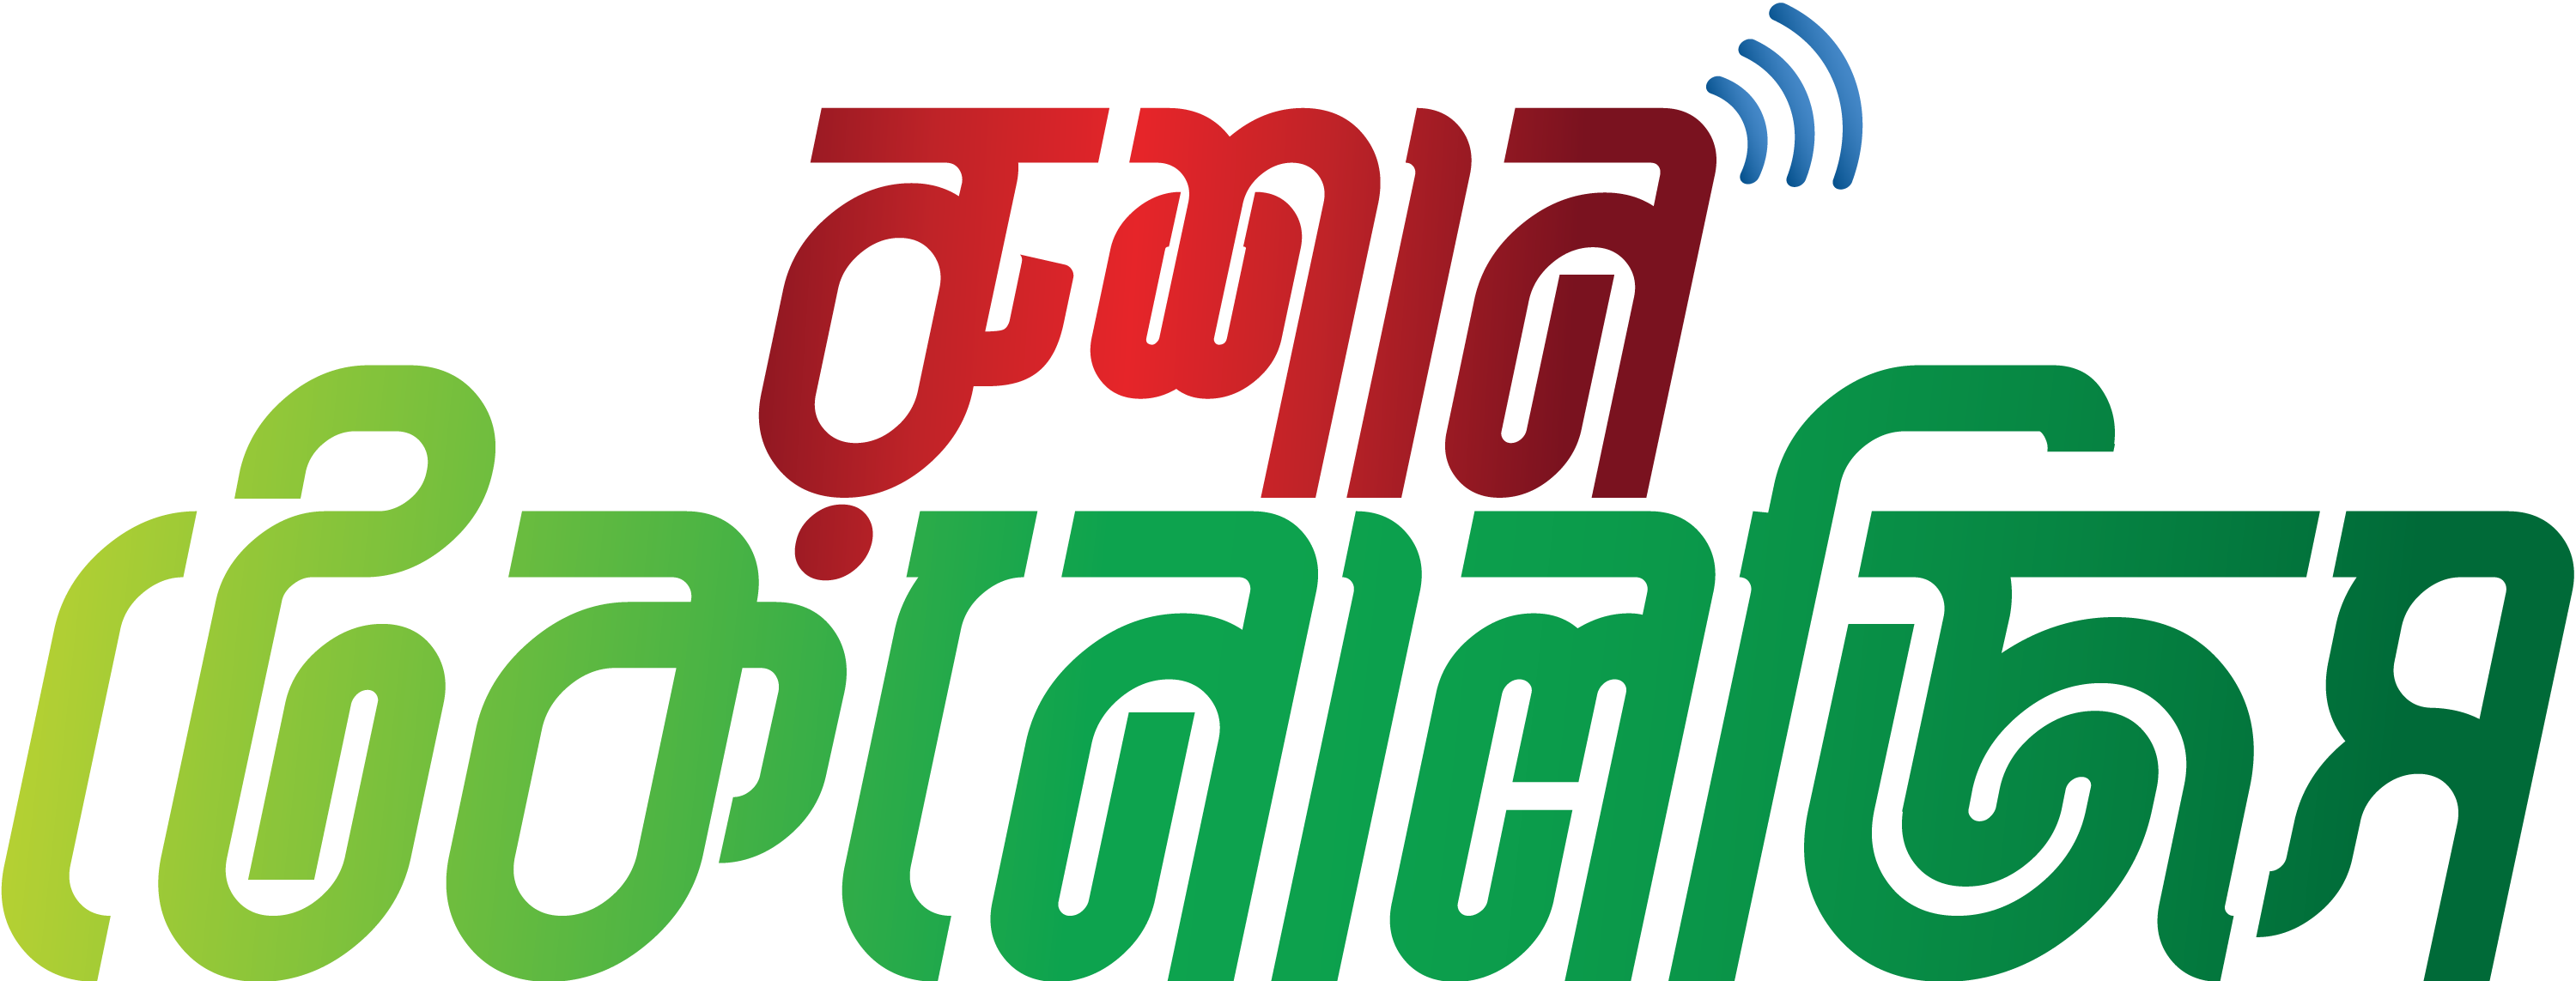 Rushan Technologies-logo